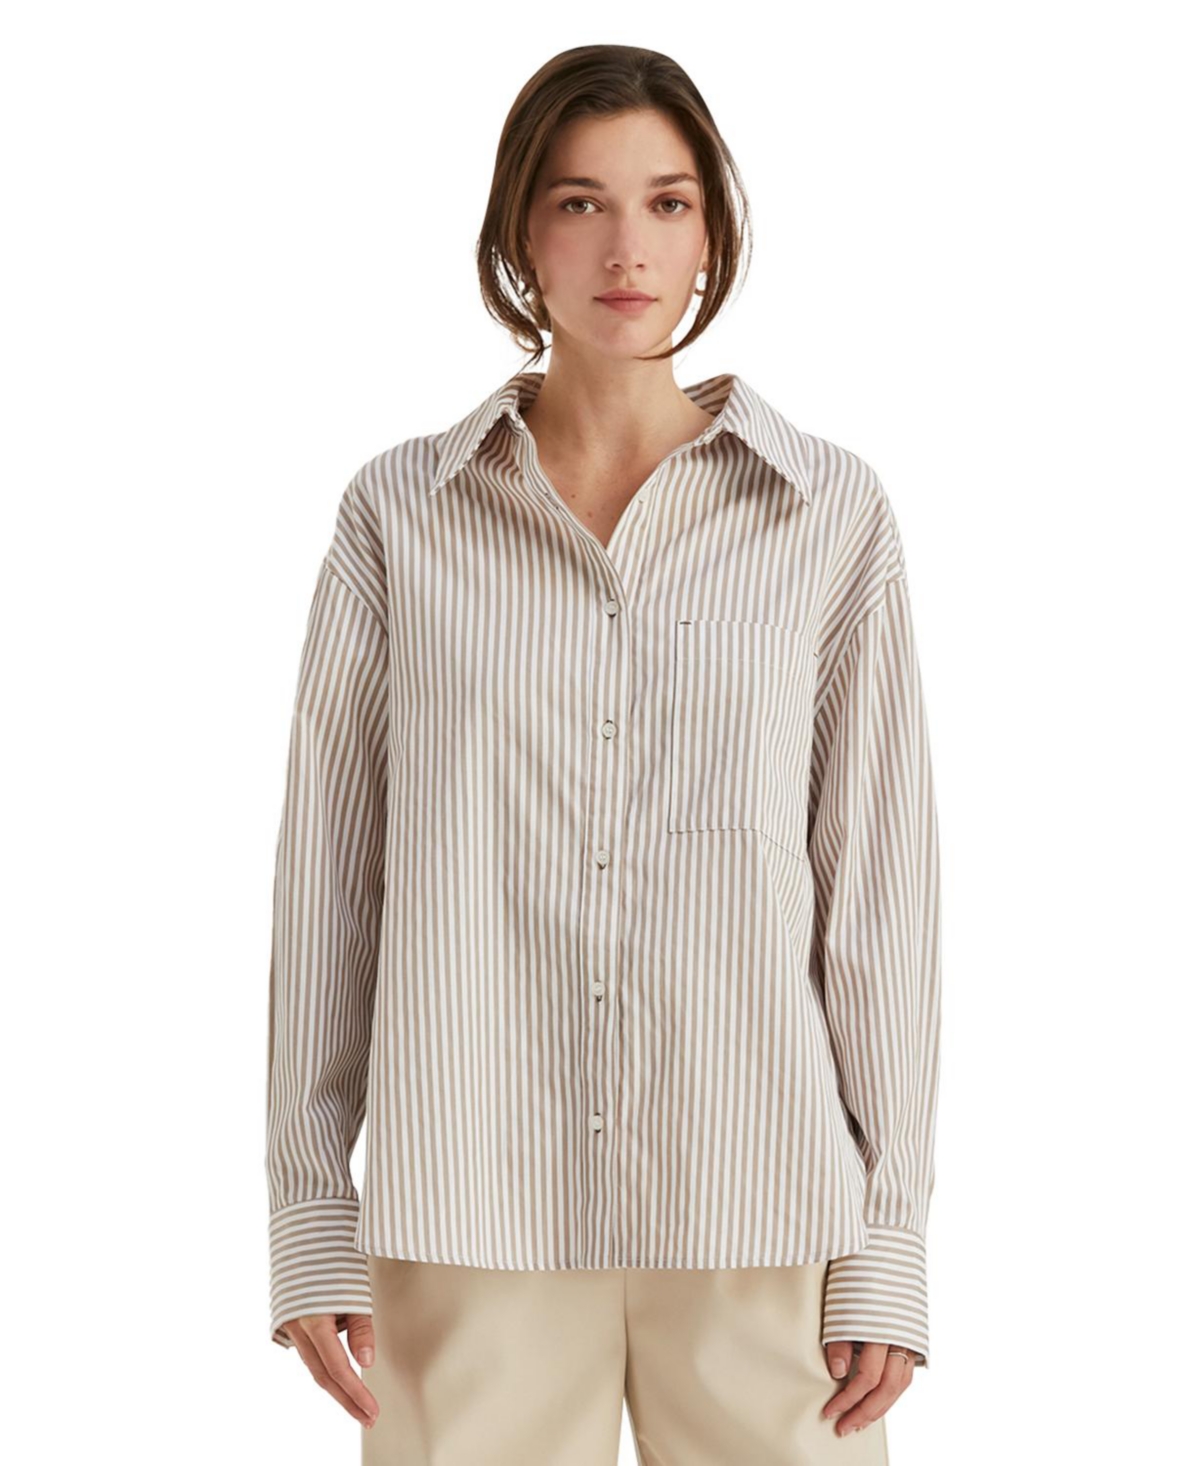 Women's Isra Striped Button Up Shirt - Beige/khaki + beige